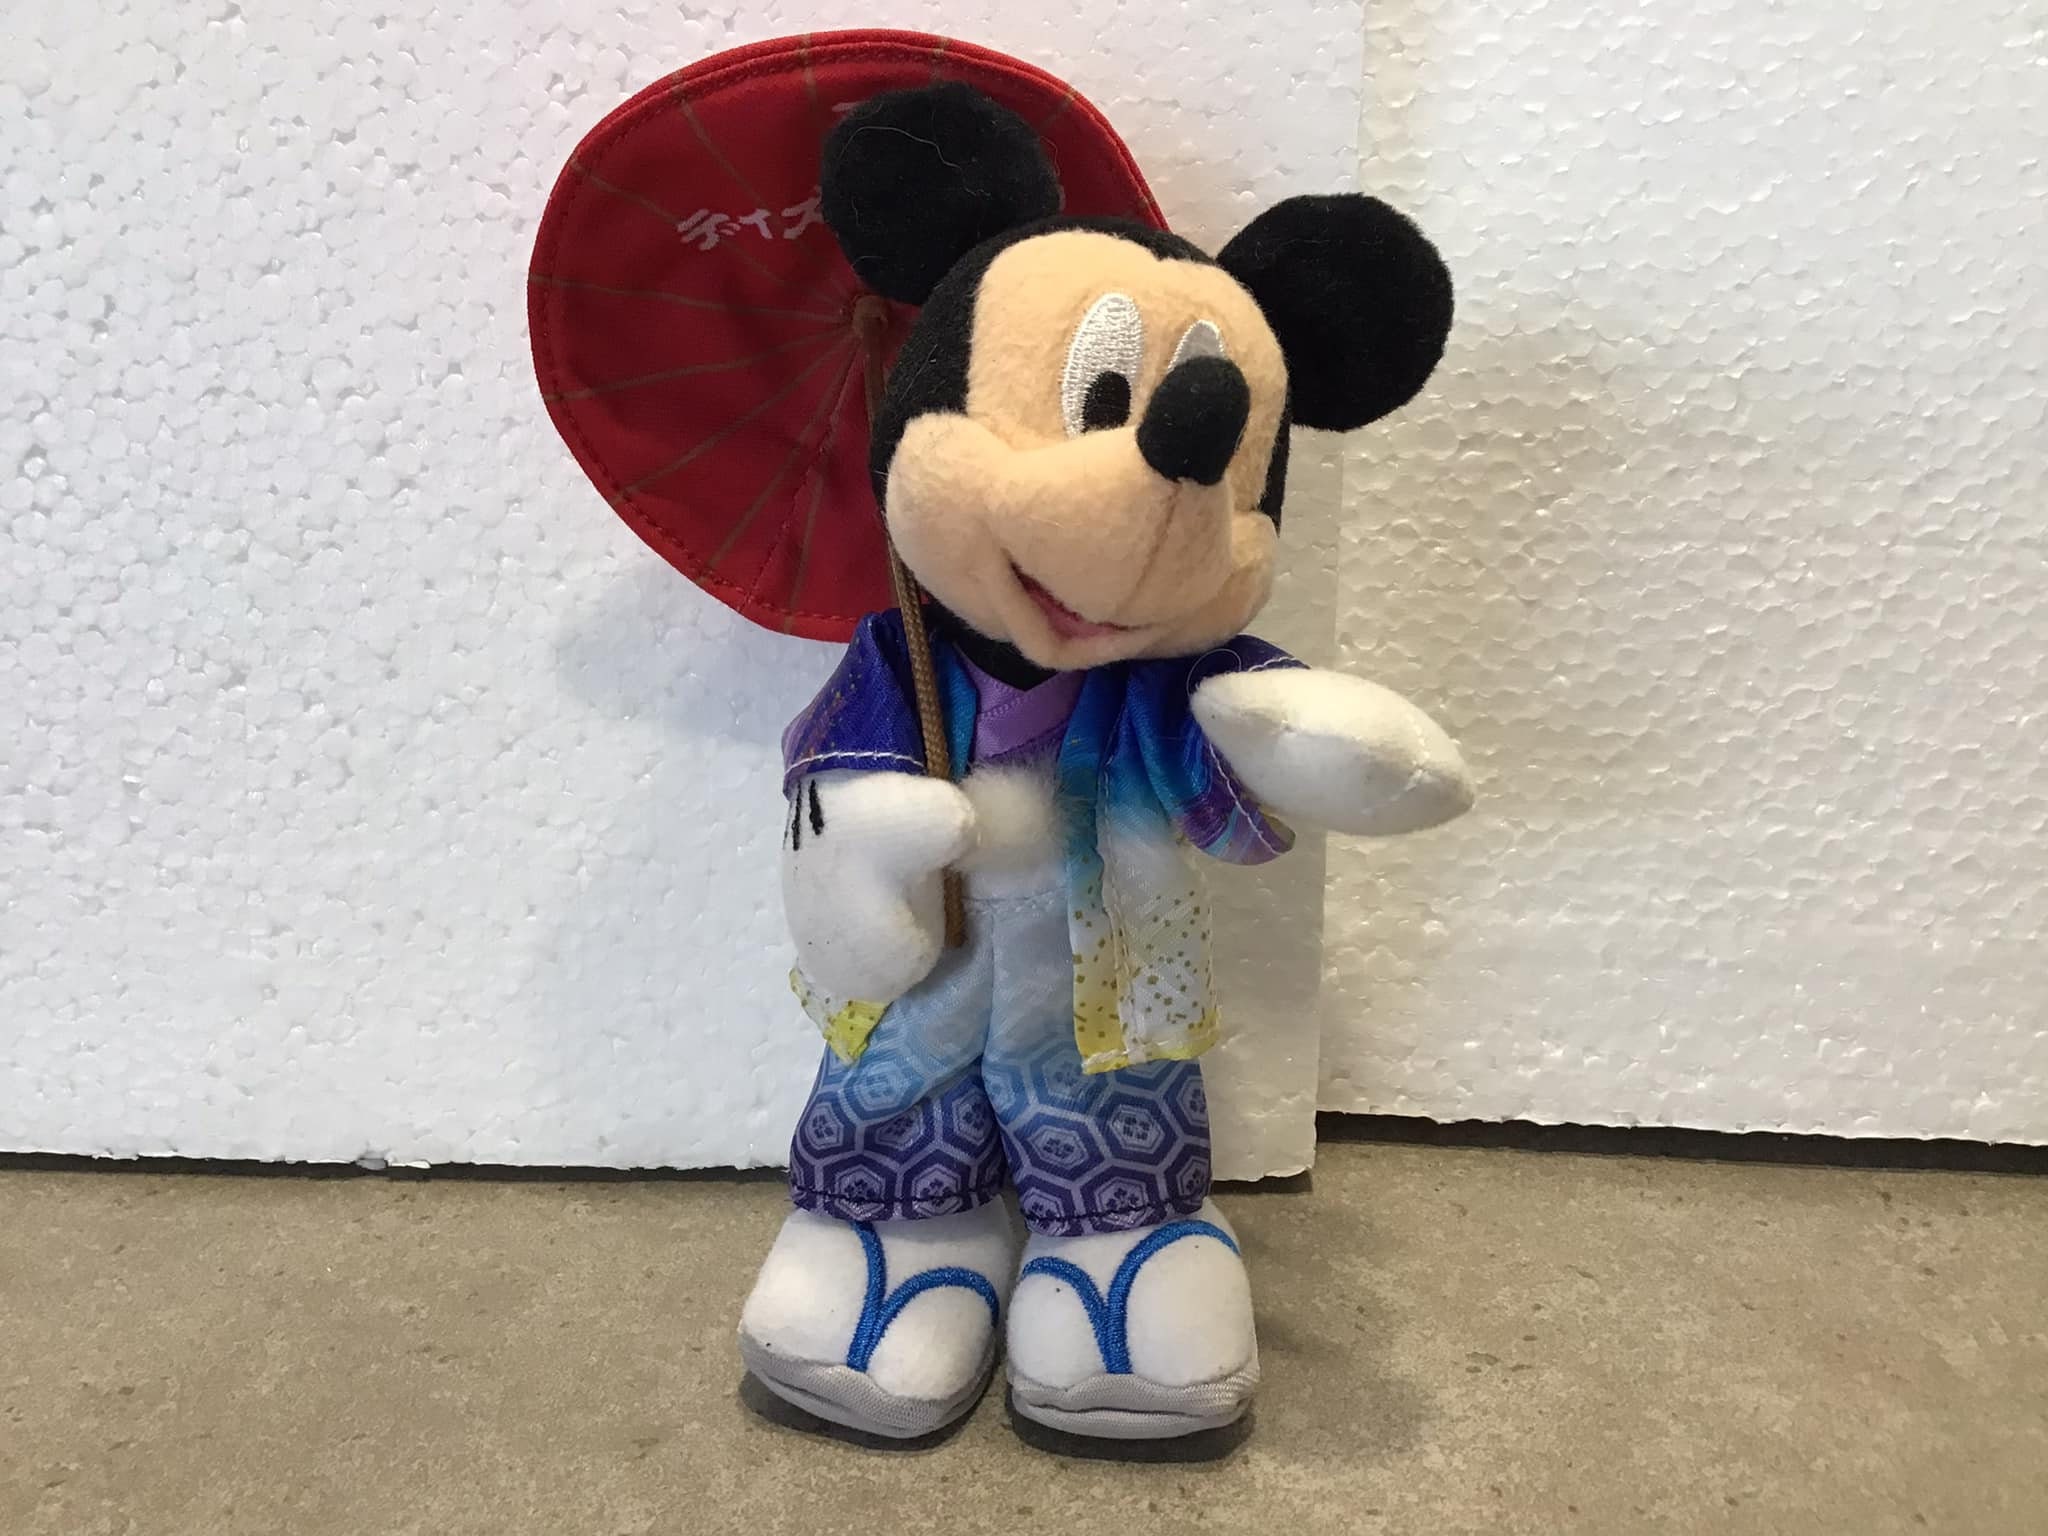 Mickey Plush Keychain, Mickey Mouse Birthday 2022